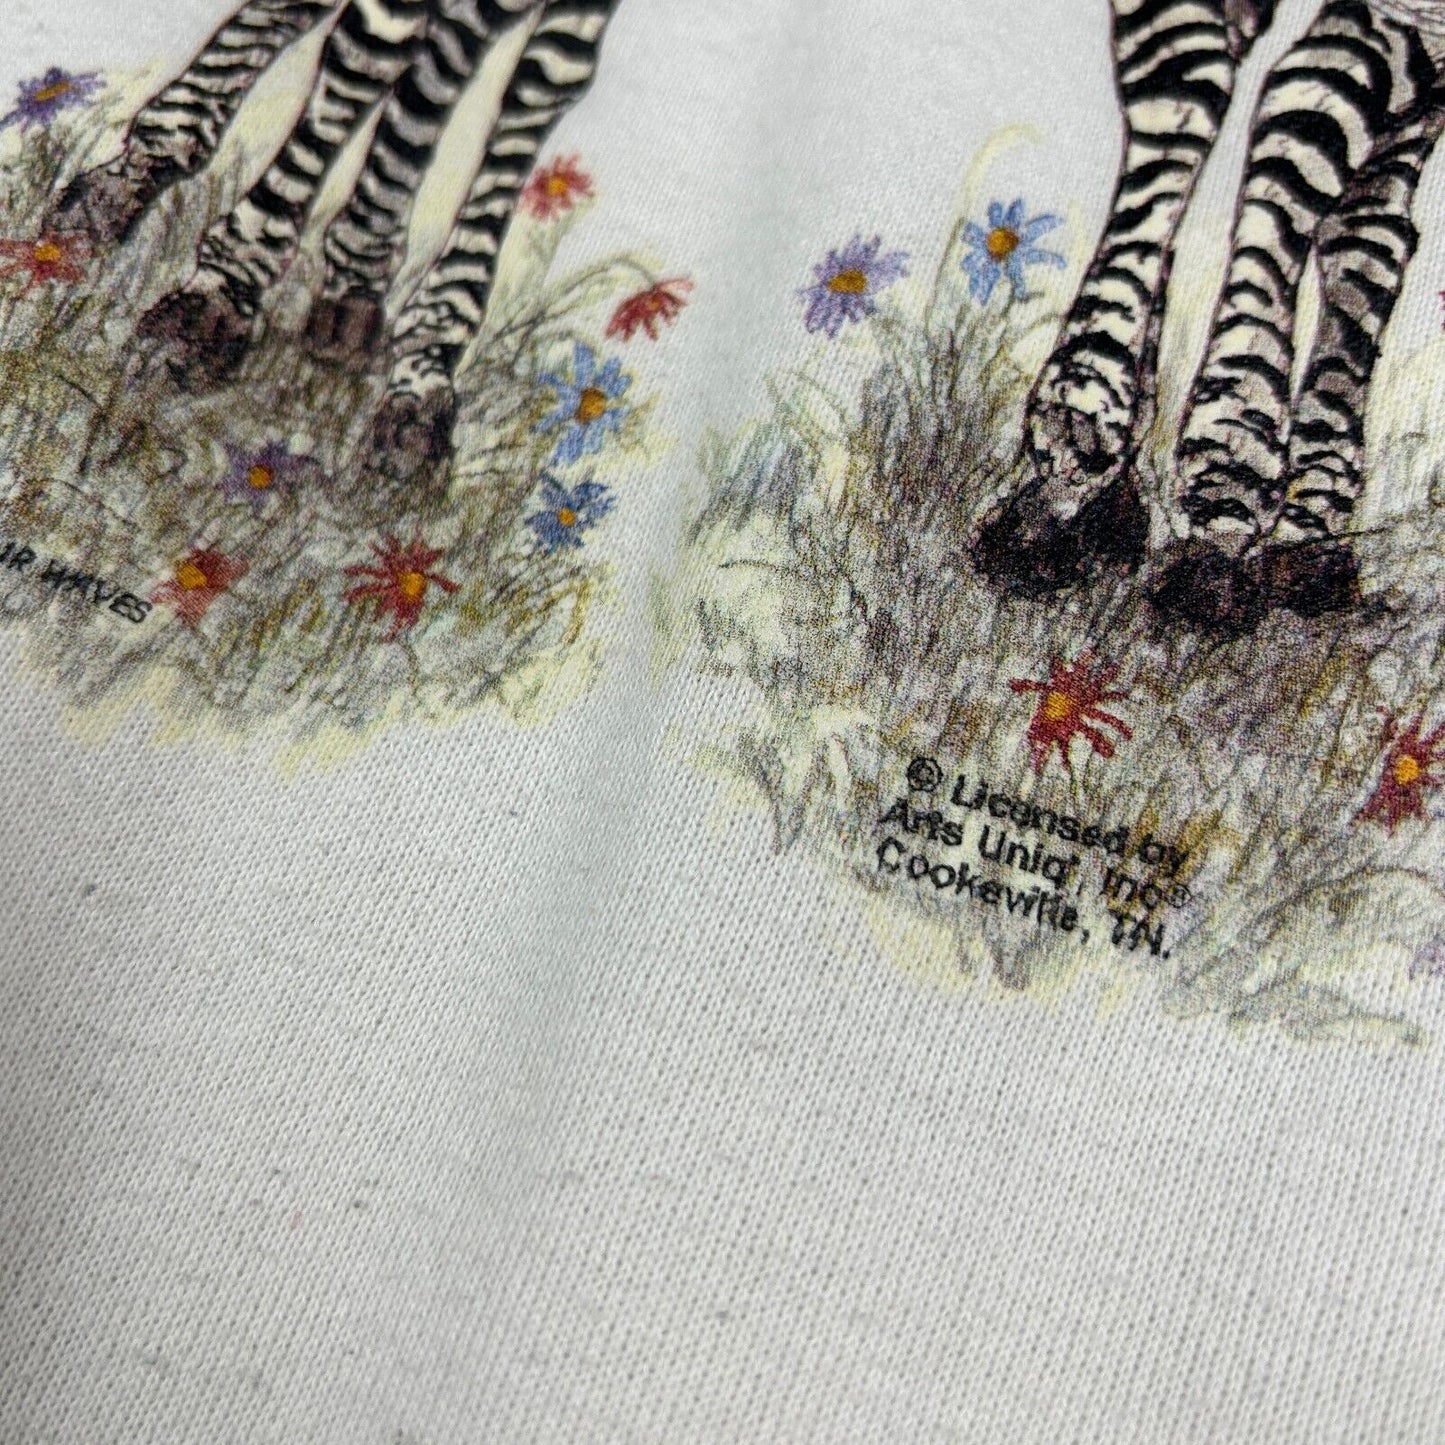 VINTAGE 90s Zebra's Animal White Crewneck Sweater sz XXL Adult